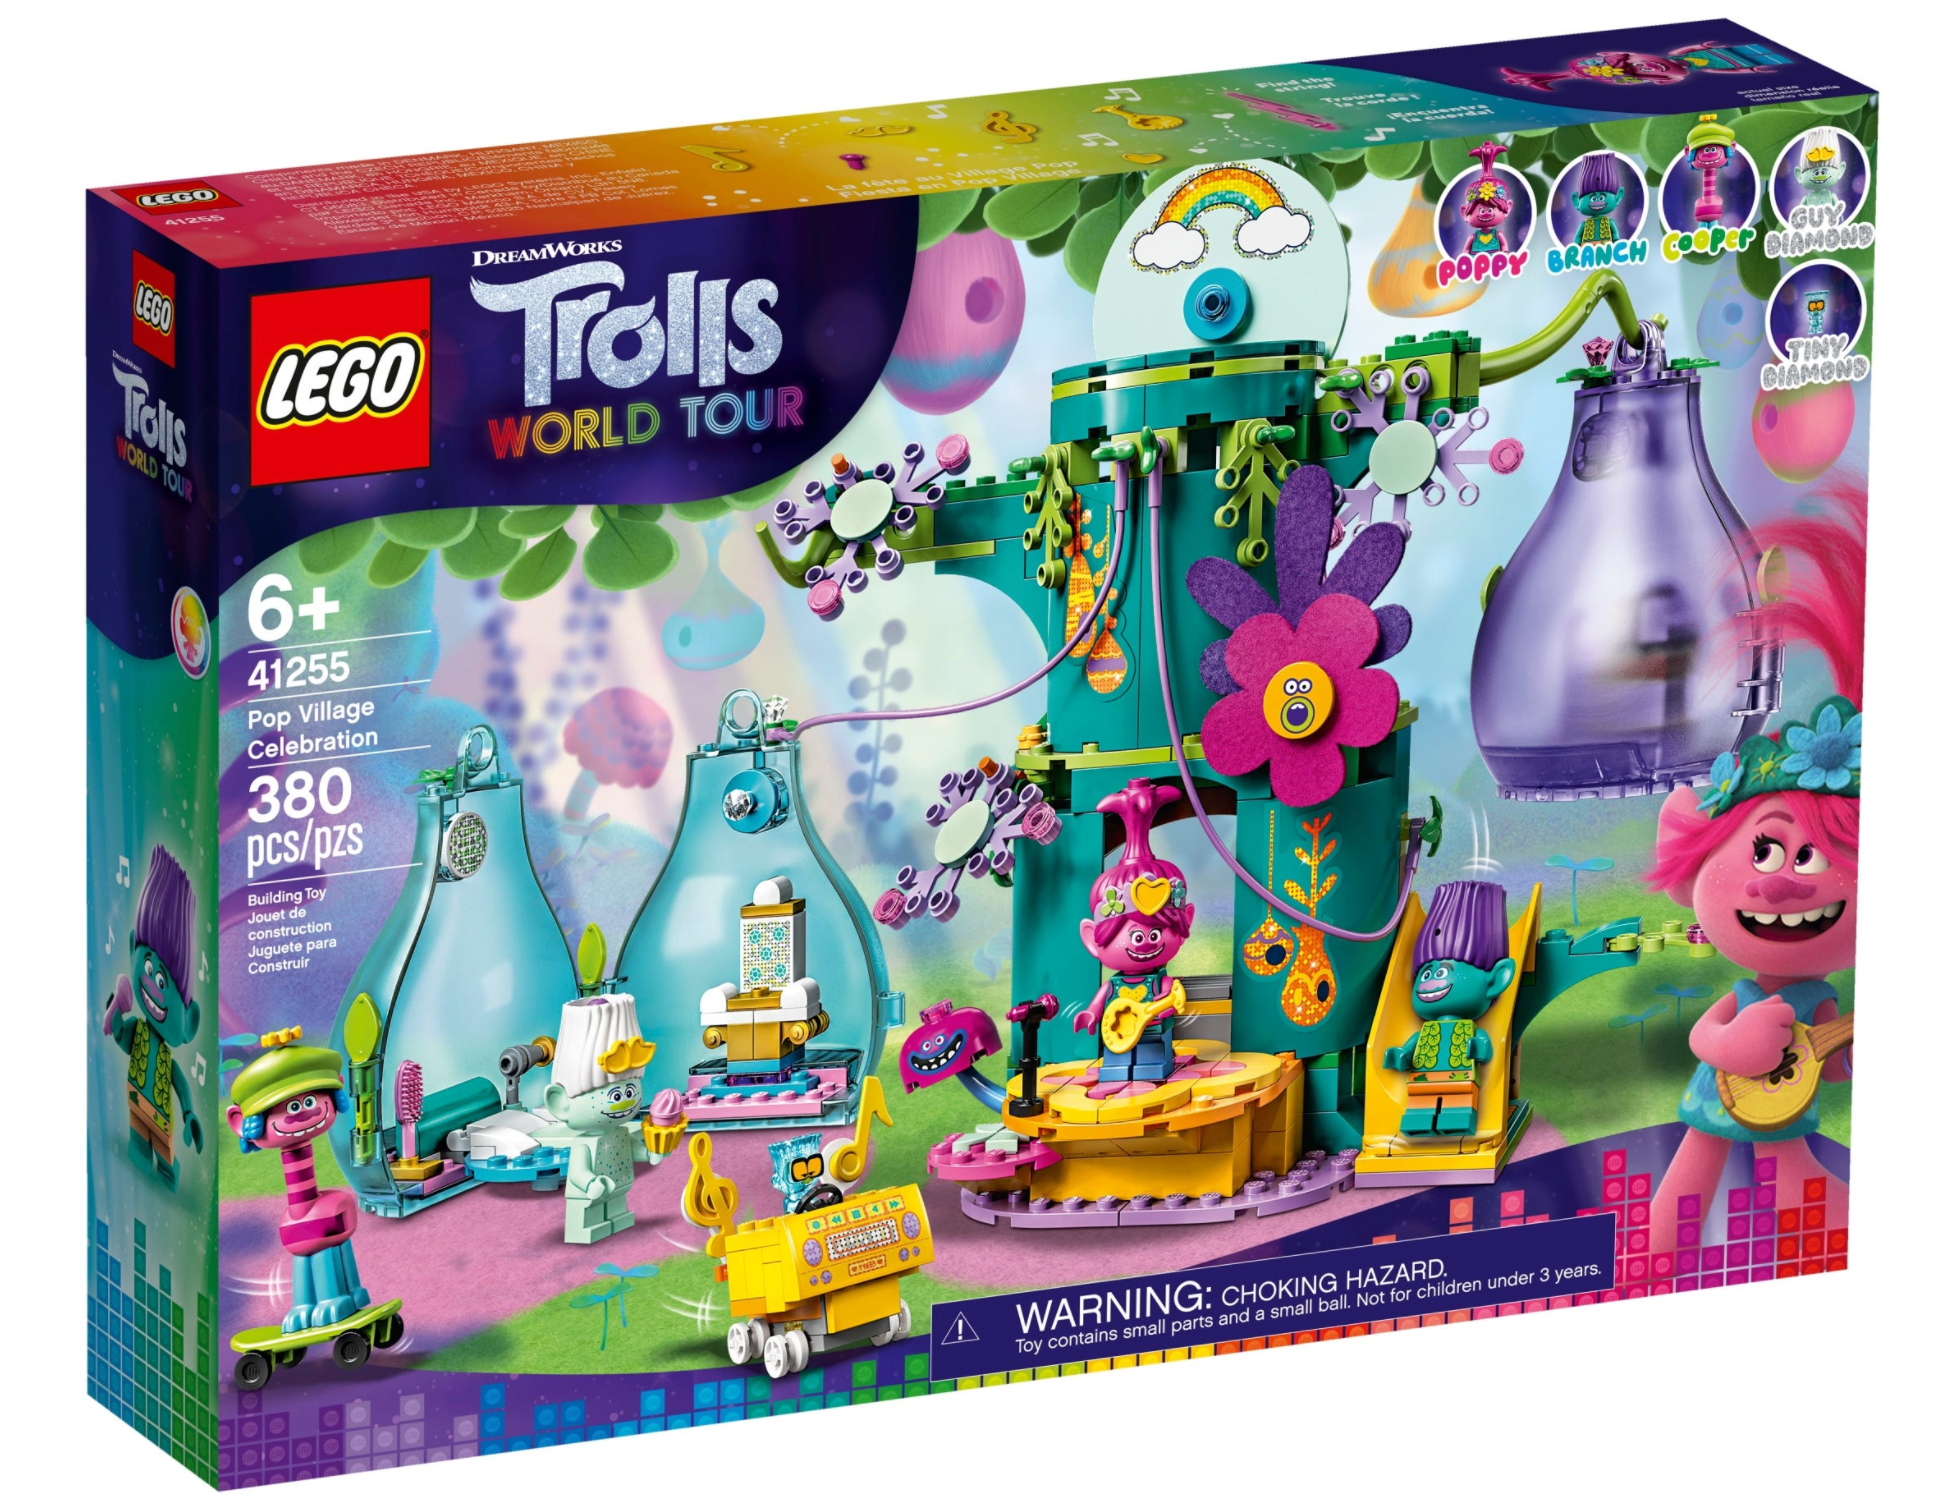 LEGO: Trolls - Pop Village Celebration